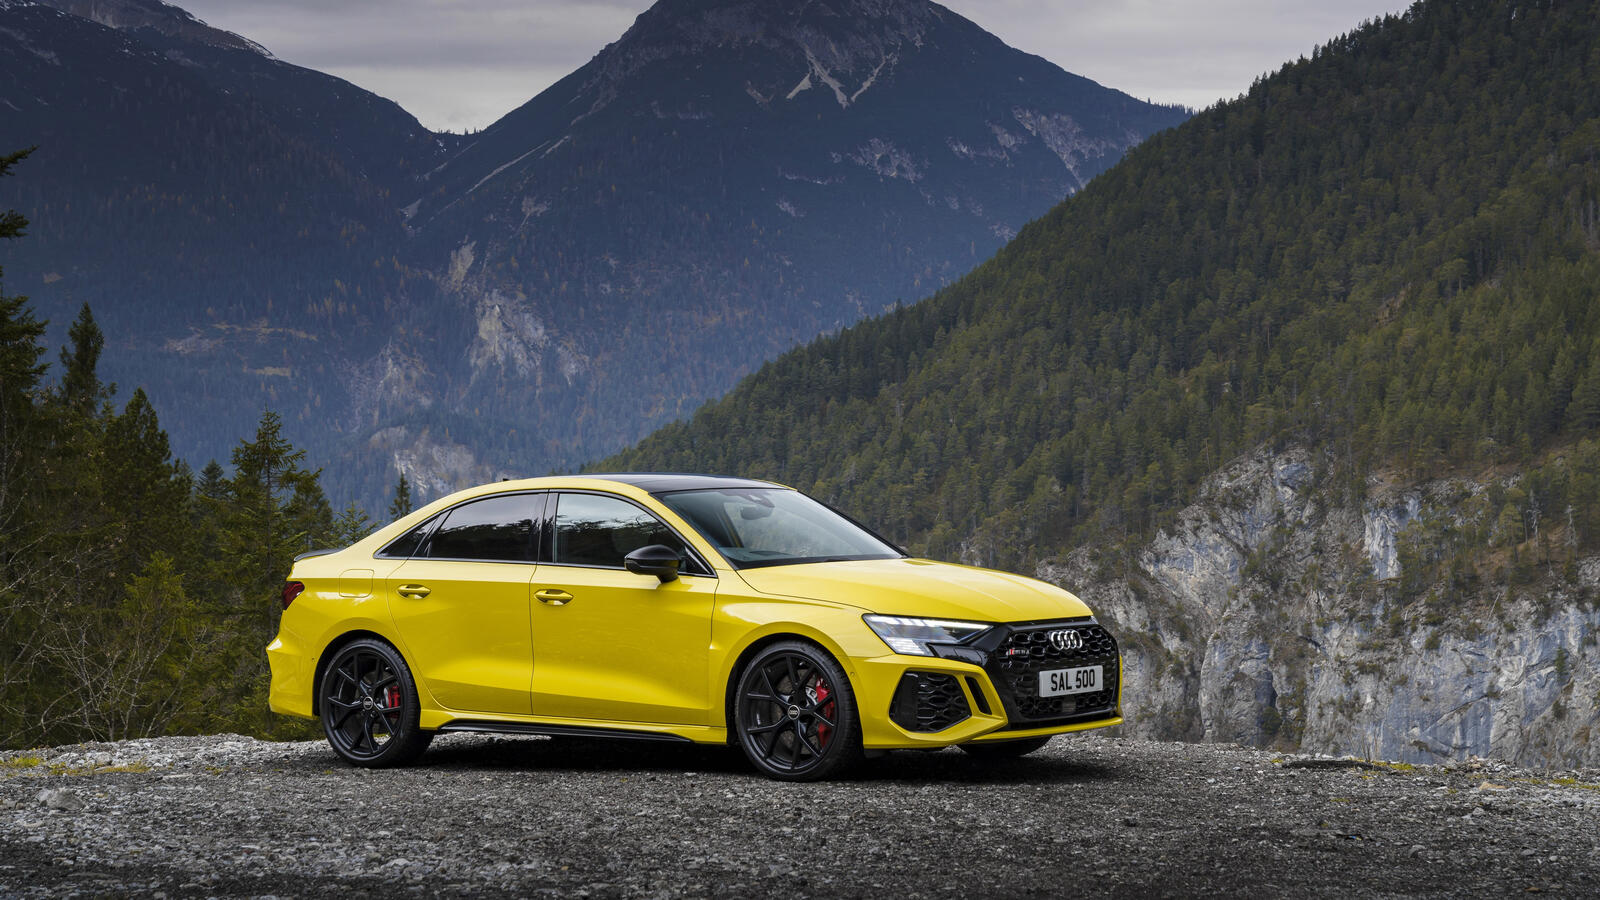 Free photo Audi rs 3 in yellow in mountainous terrain